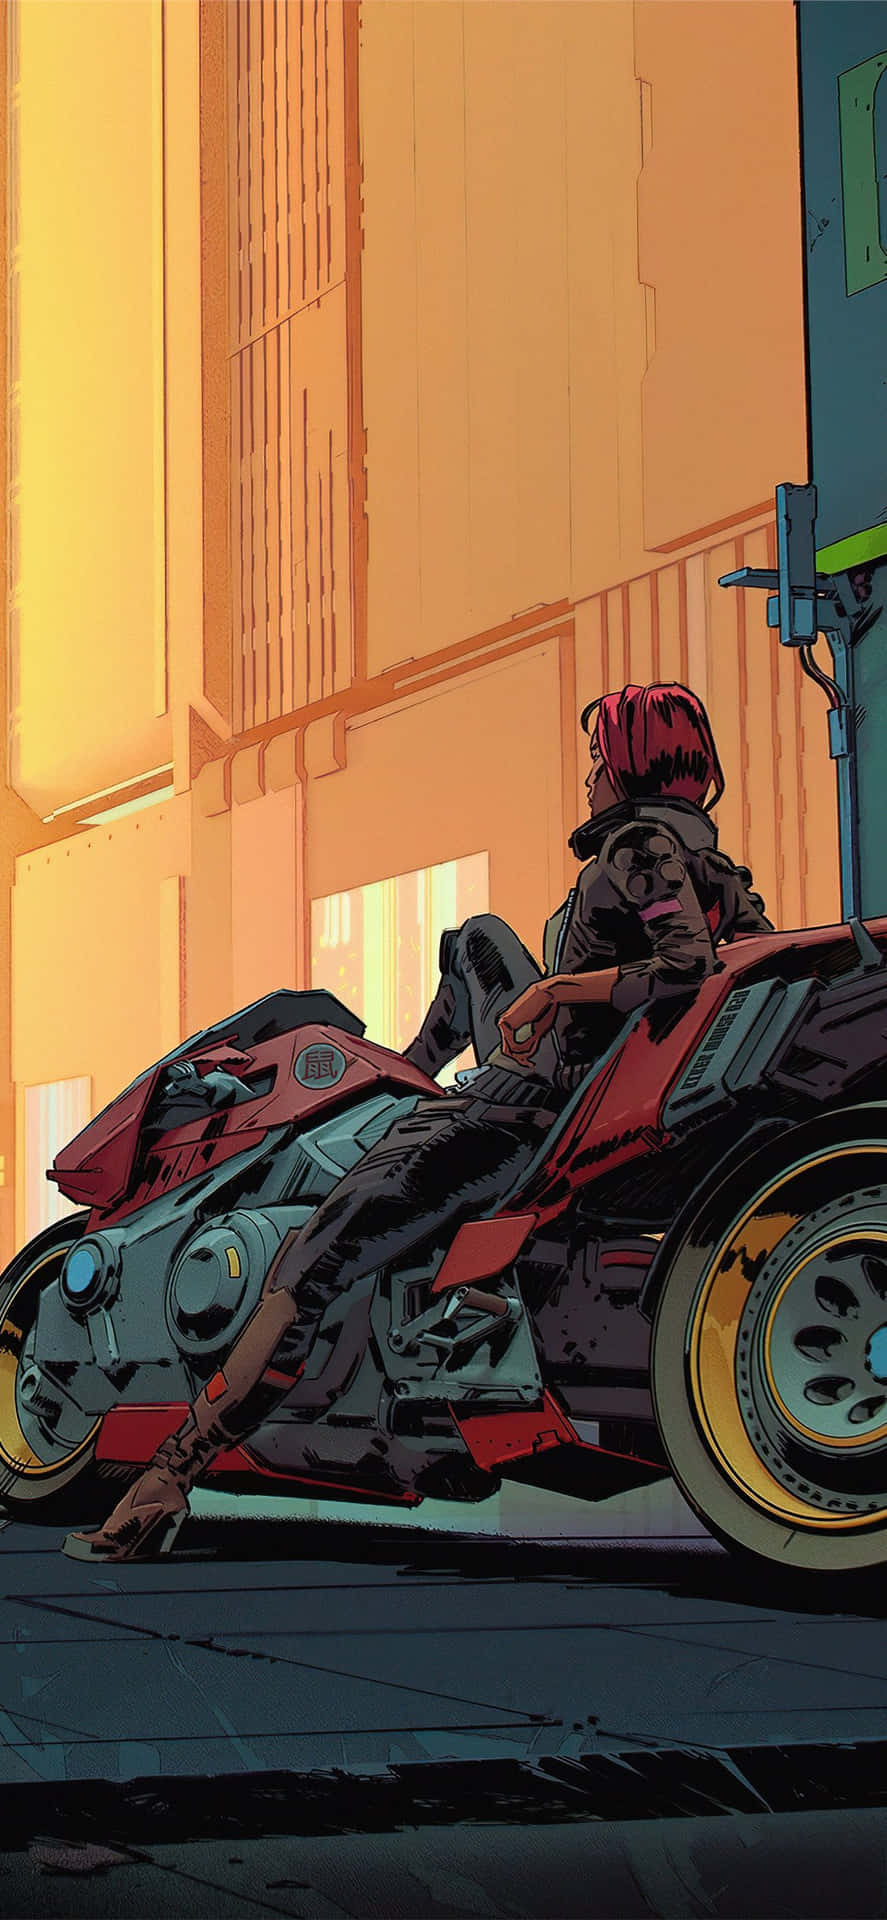 Iphone X Cyberpunk 2077 Background Woman Sitting On Motorcycle